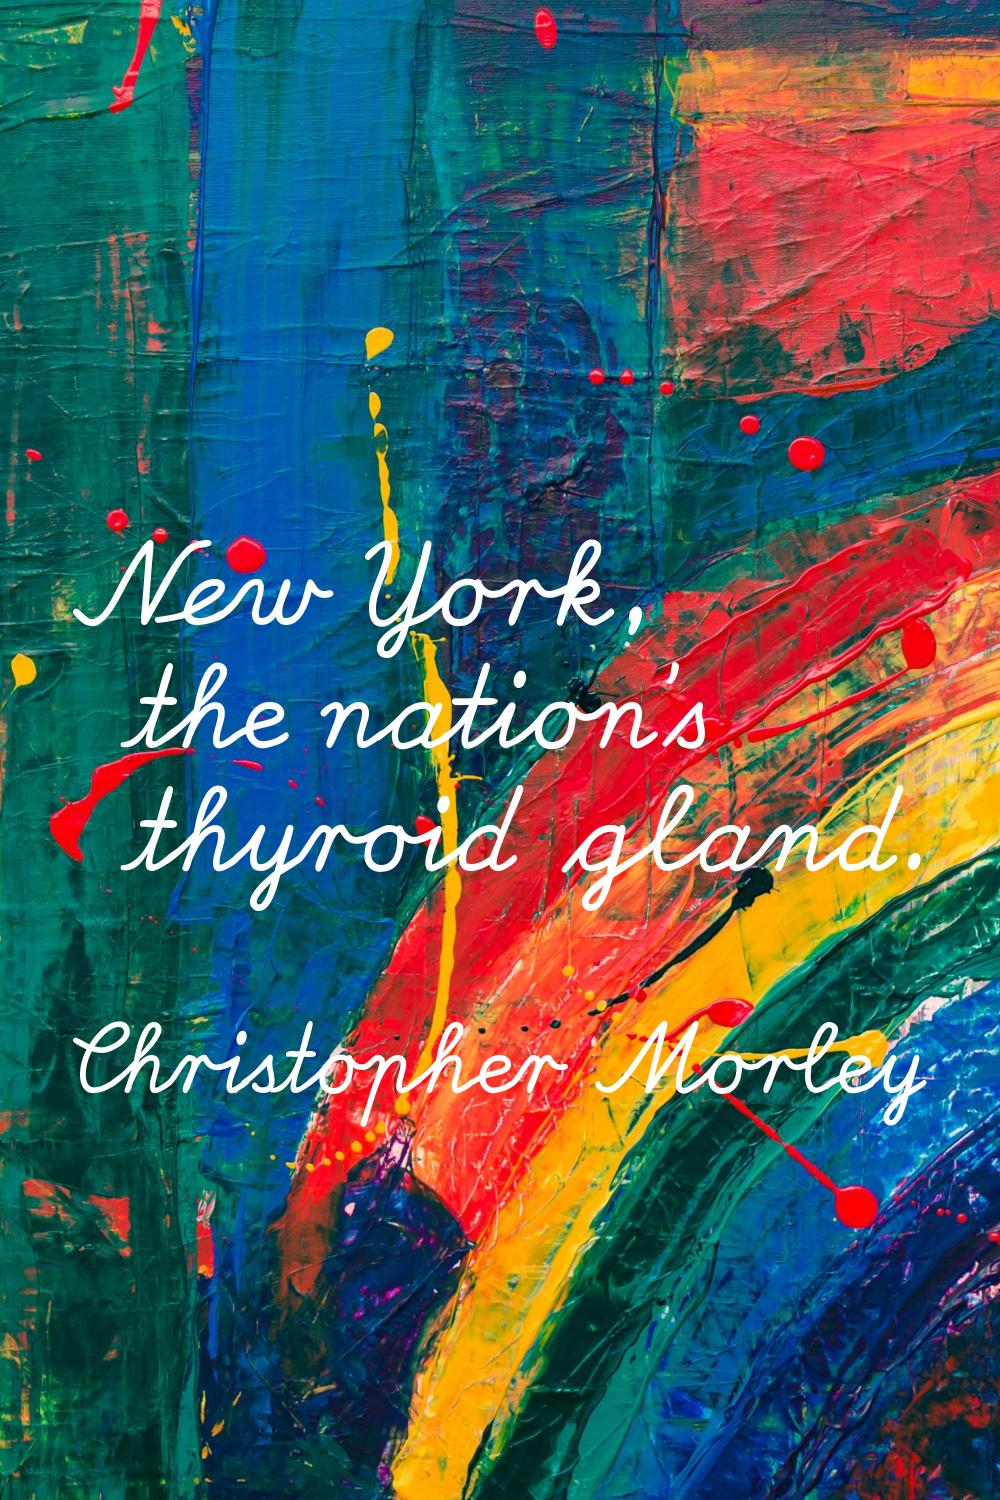 New York, the nation's thyroid gland.